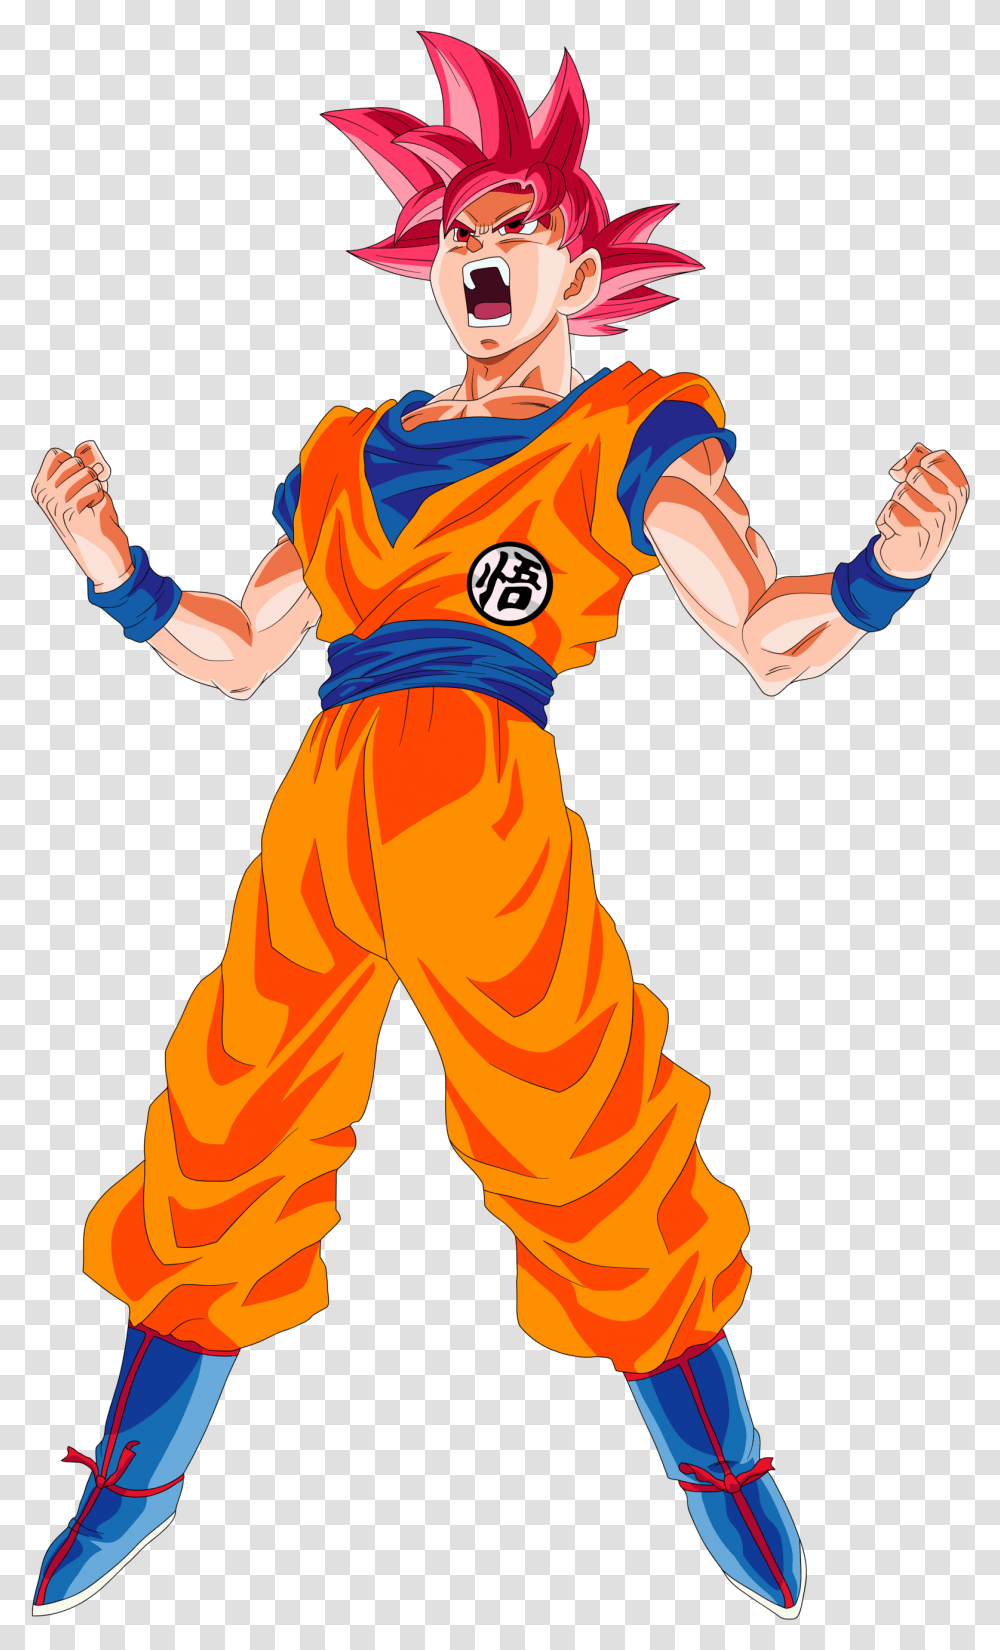 Goku Super Saiyan God Power Up Palette 1 By Eymsmiley D92yoor Goku Ssj God, Person, Costume, Astronaut Transparent Png